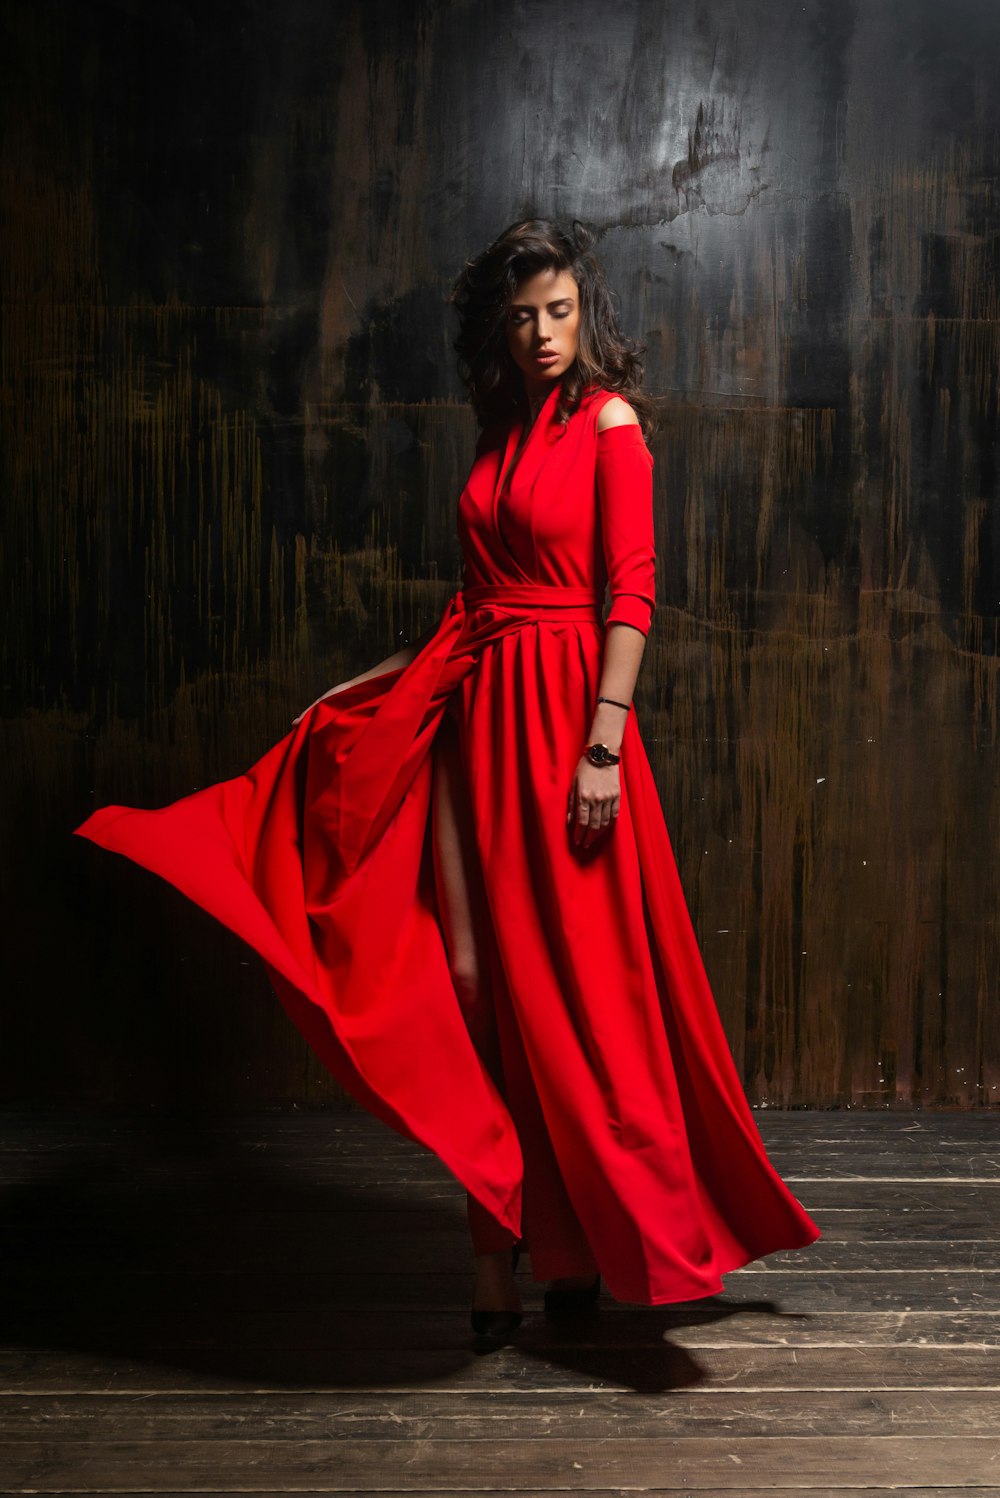 Frau trägt rotes Kleid mit 3/4-Ärmeln